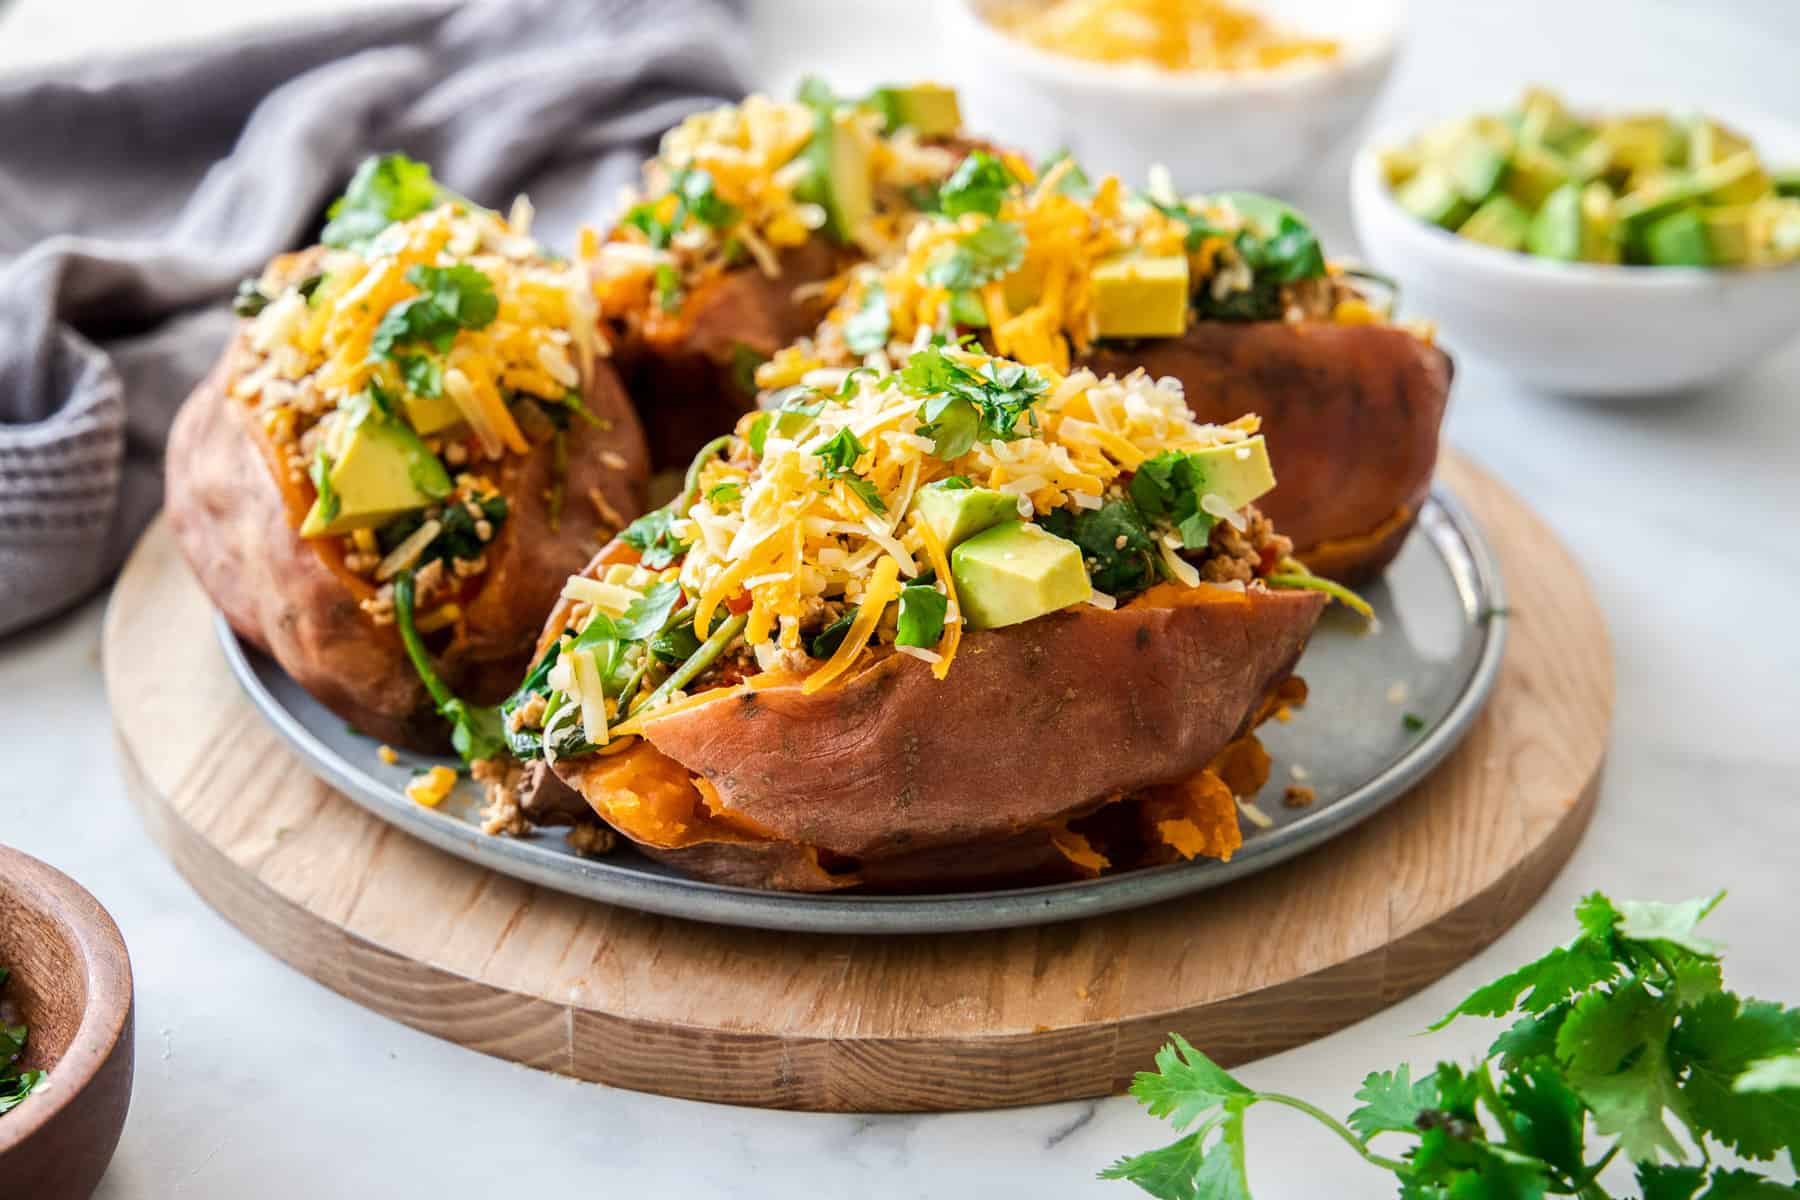 A platter of Taco stuffed sweet potatoes.